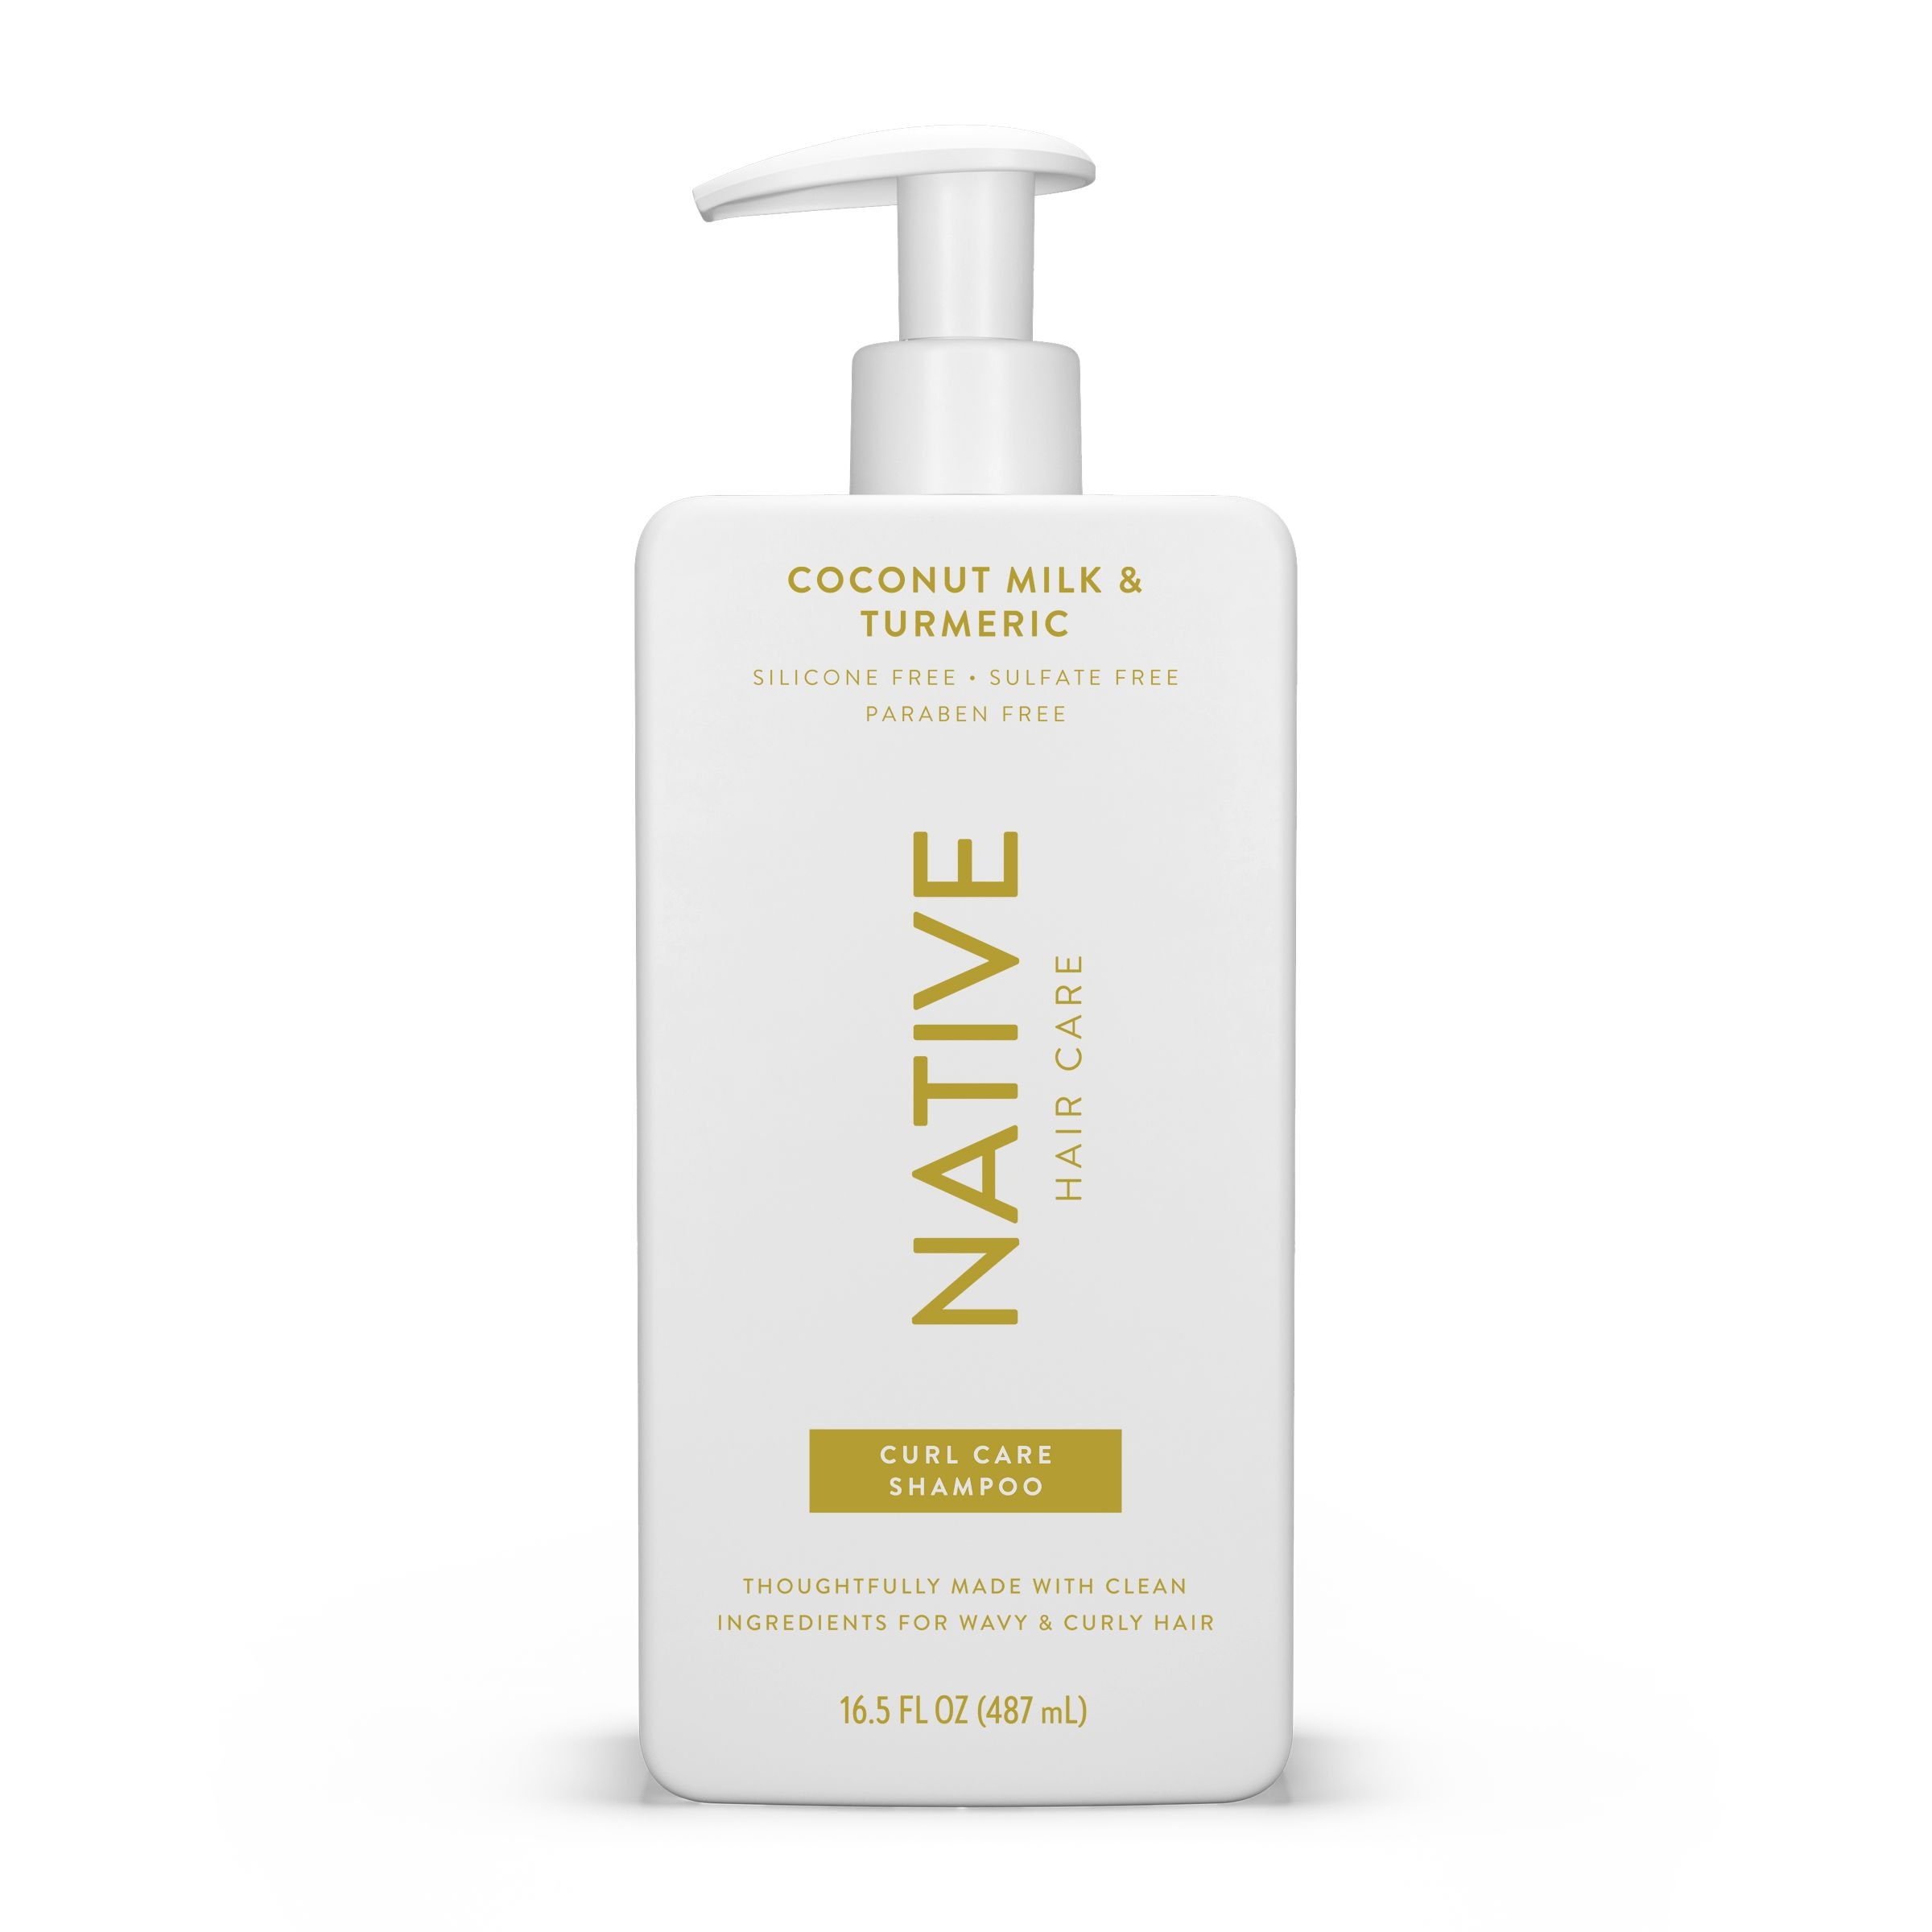 Native Curl Care Shampoo, Coconut Milk & Turmeric, Sulfate & Paraben Free, 16.5 oz - image 1 of 6